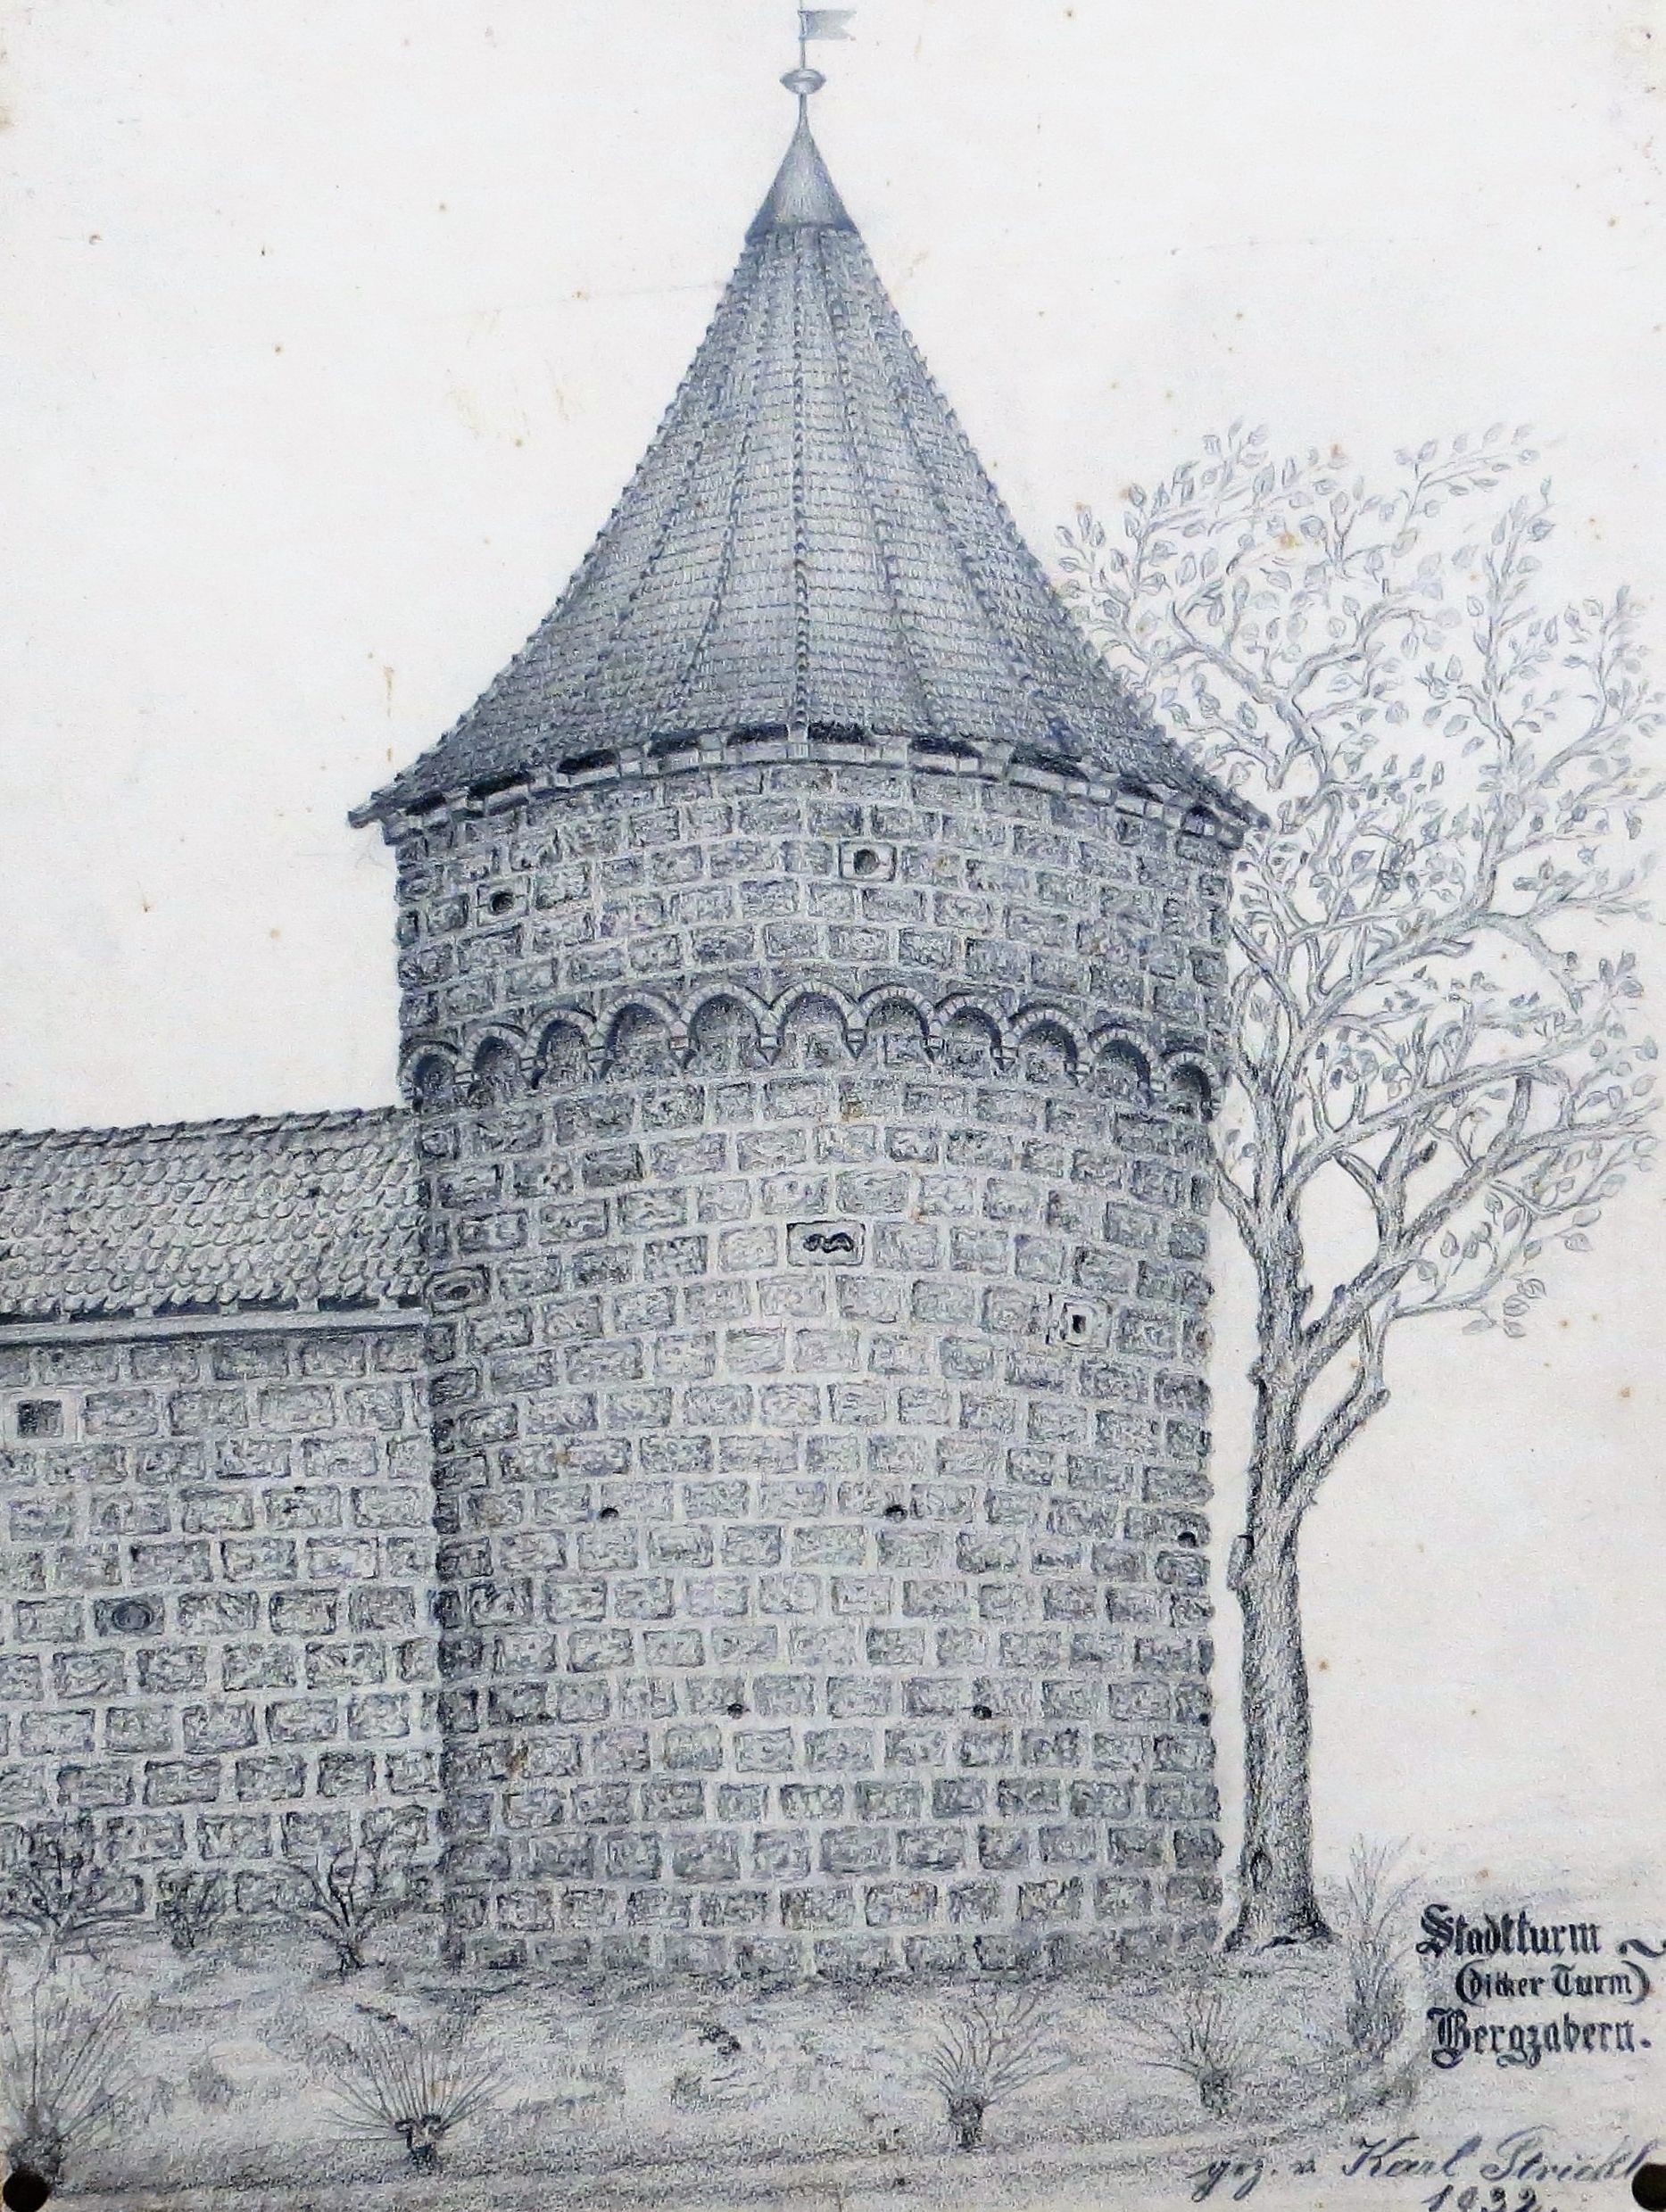 Zeichnung, Stadtturm (dicker Turm) Bergzabern (Museum der Stadt Bad Bergzabern CC BY-NC-SA)